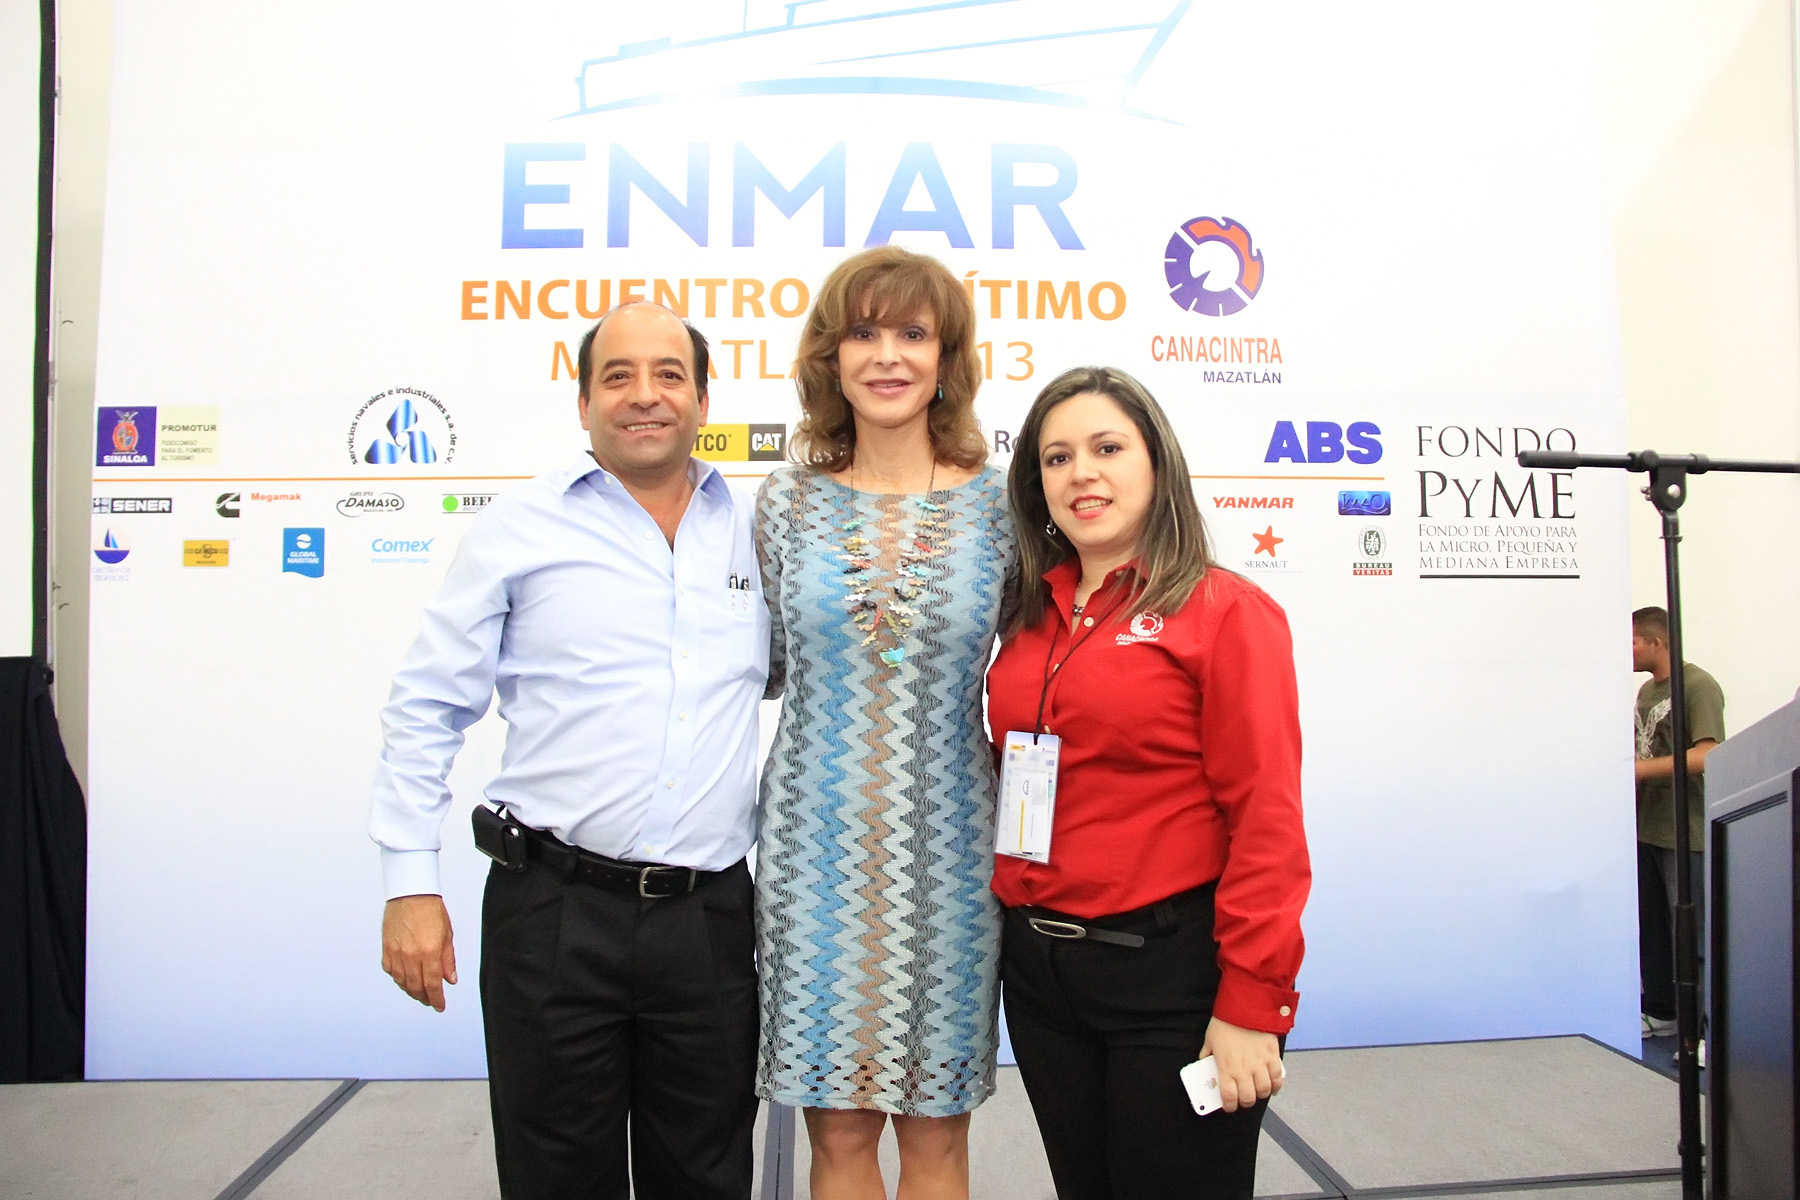 ENMAR Martime Conference, Canacintra, Mazatlan, Mexico June 13/14, 2013